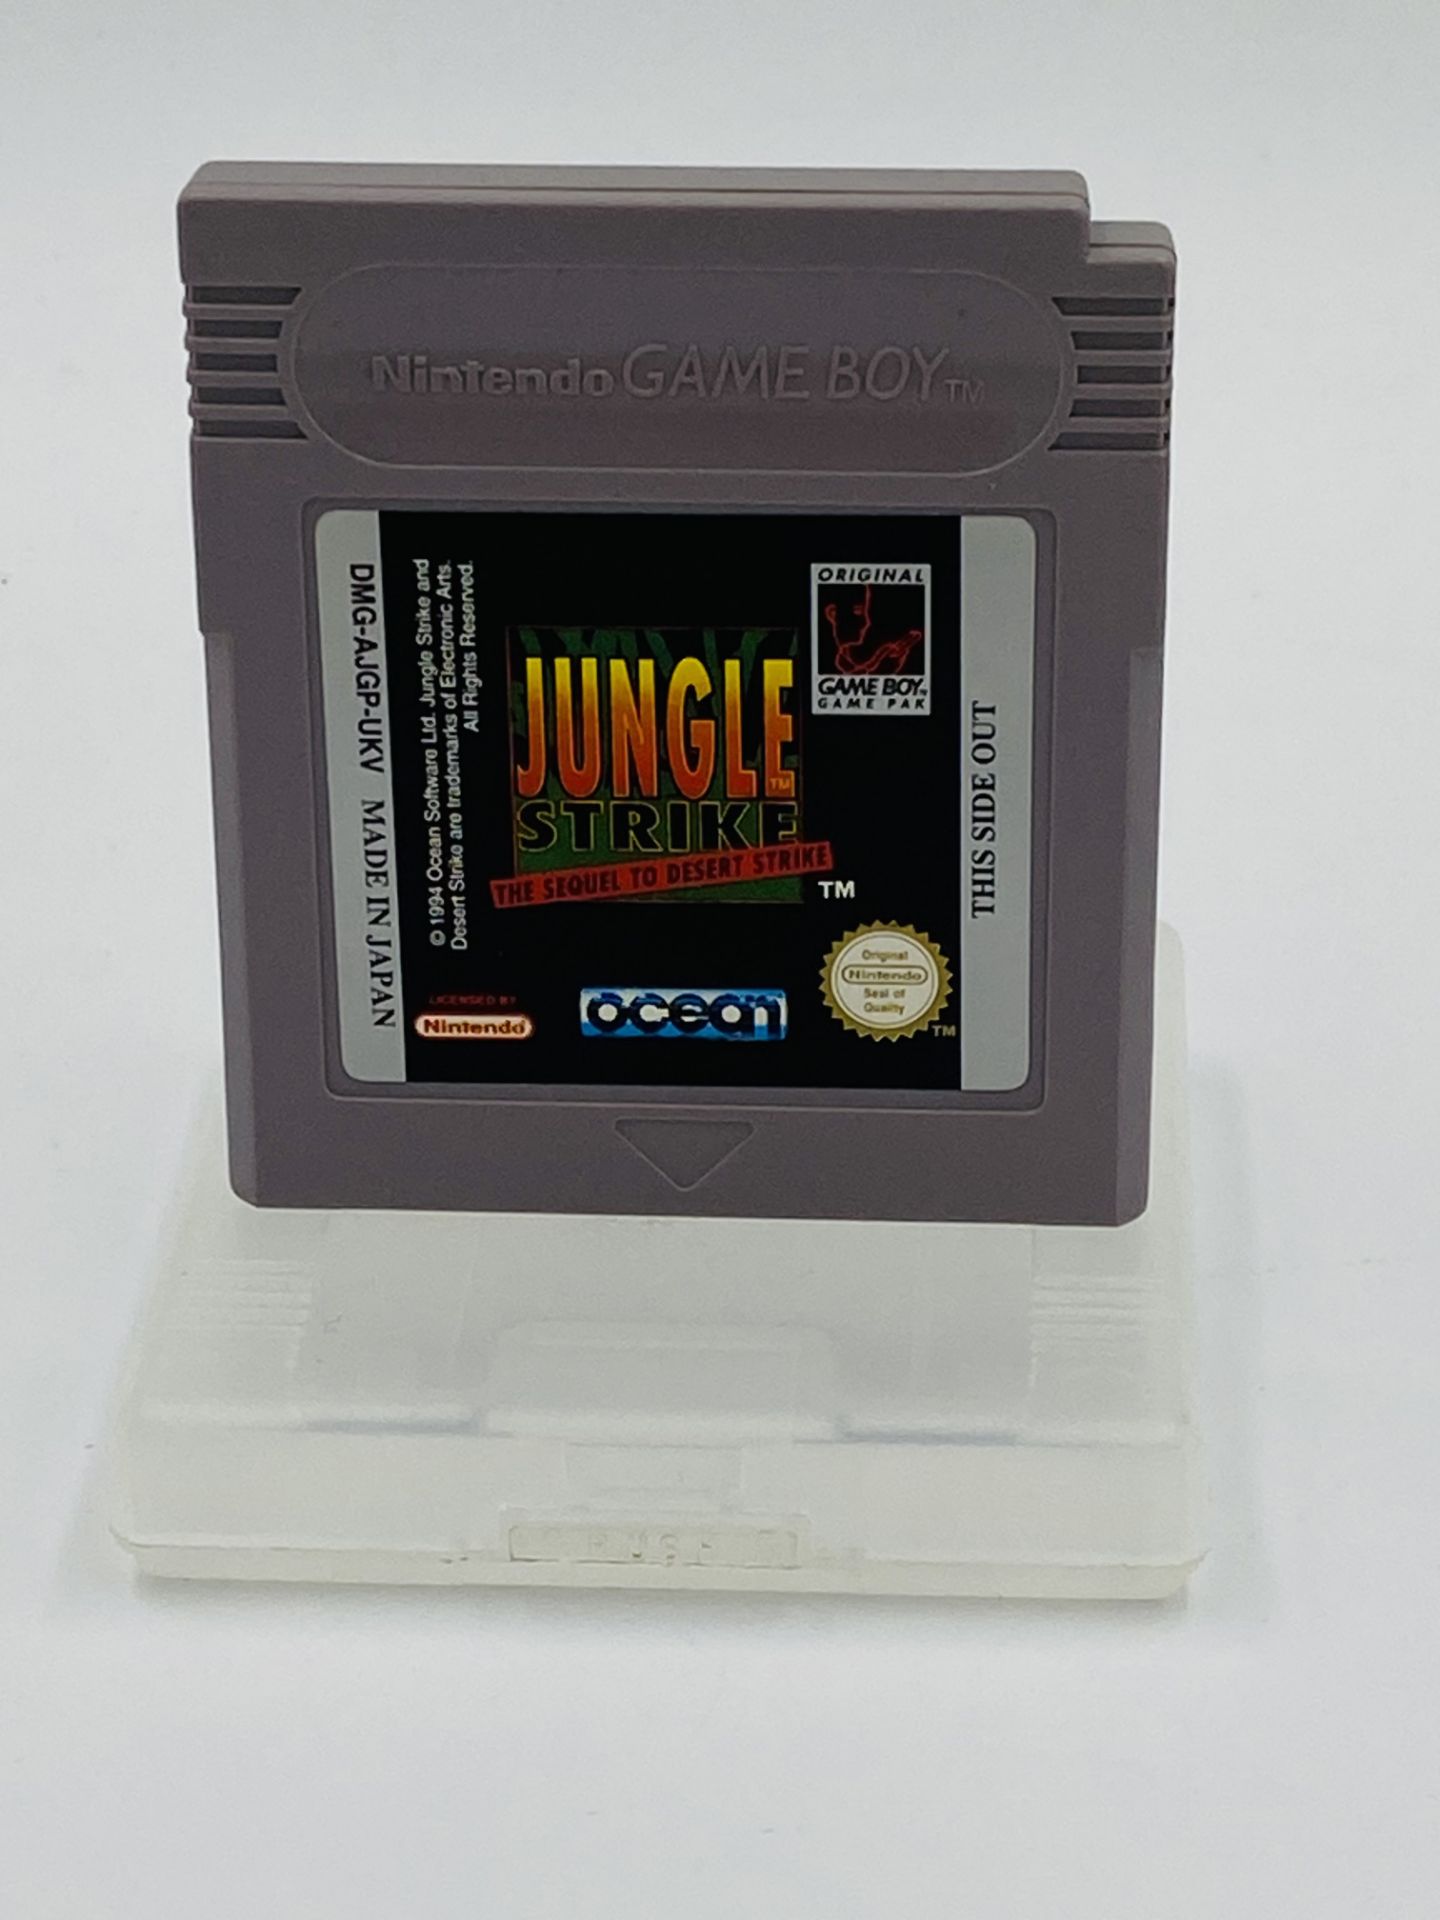 Nintendo Game Boy Jungle Strike, boxed - Image 3 of 4